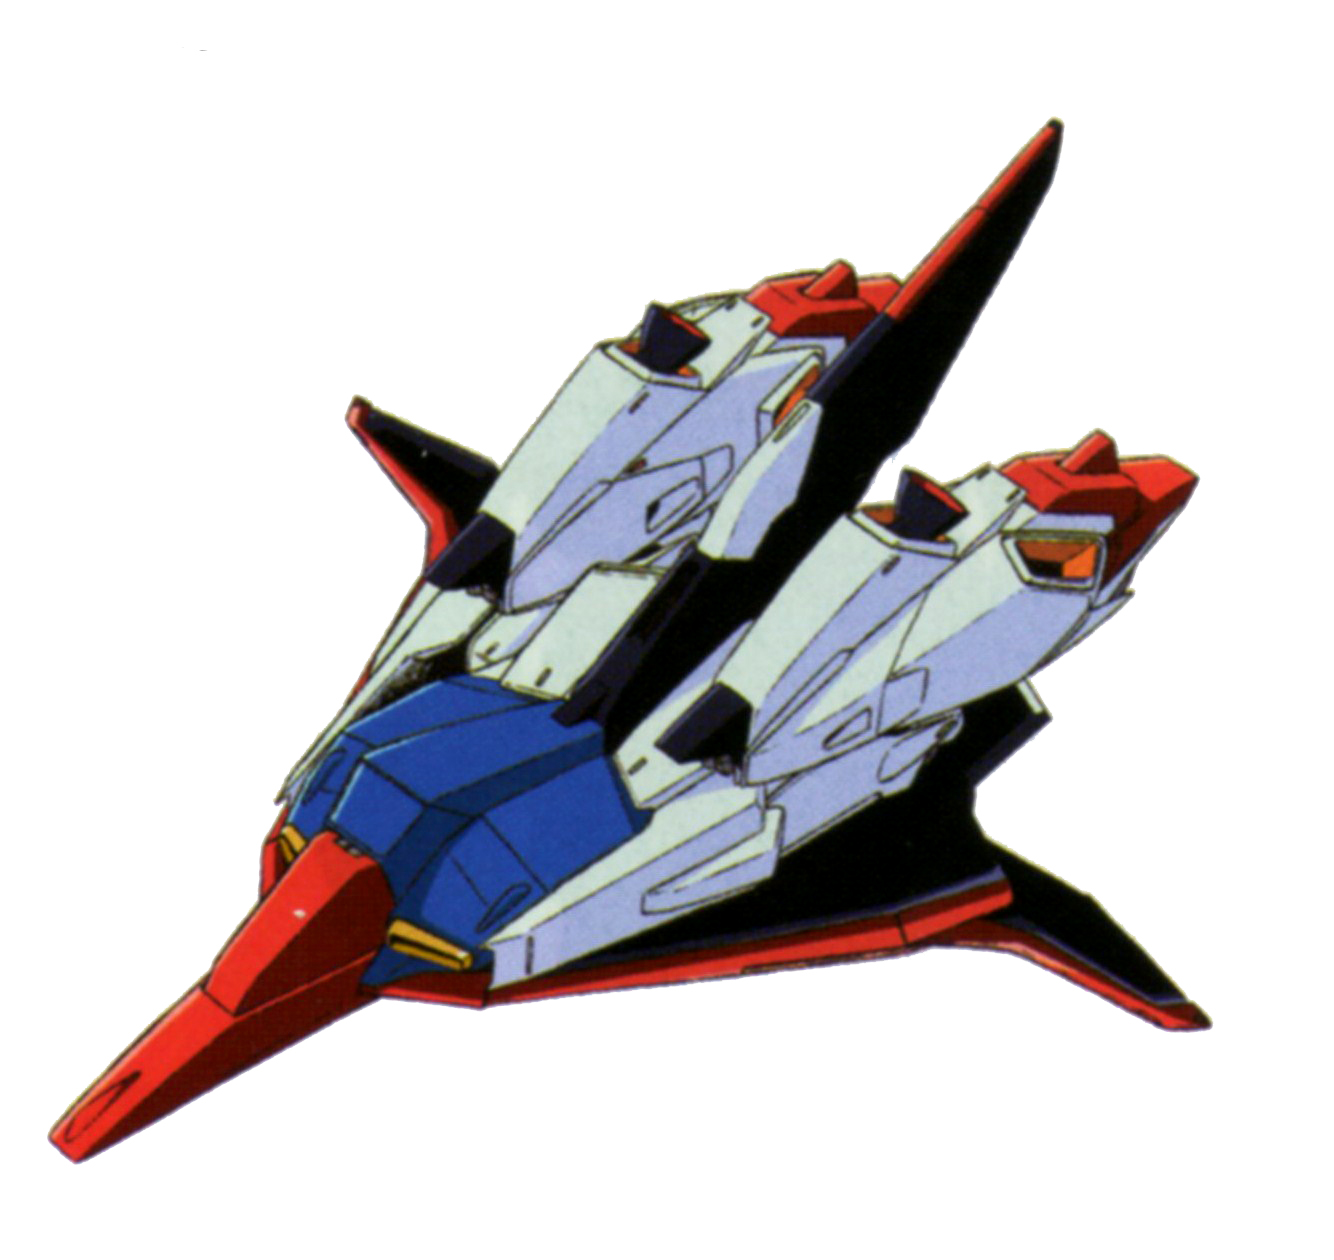 Forum Image: http://images4.wikia.nocookie.net/__cb20121115194860/gundam/images/c/c4/MSZ-006_-_Zeta_Gundam_-_Waverider_Mode.jpg